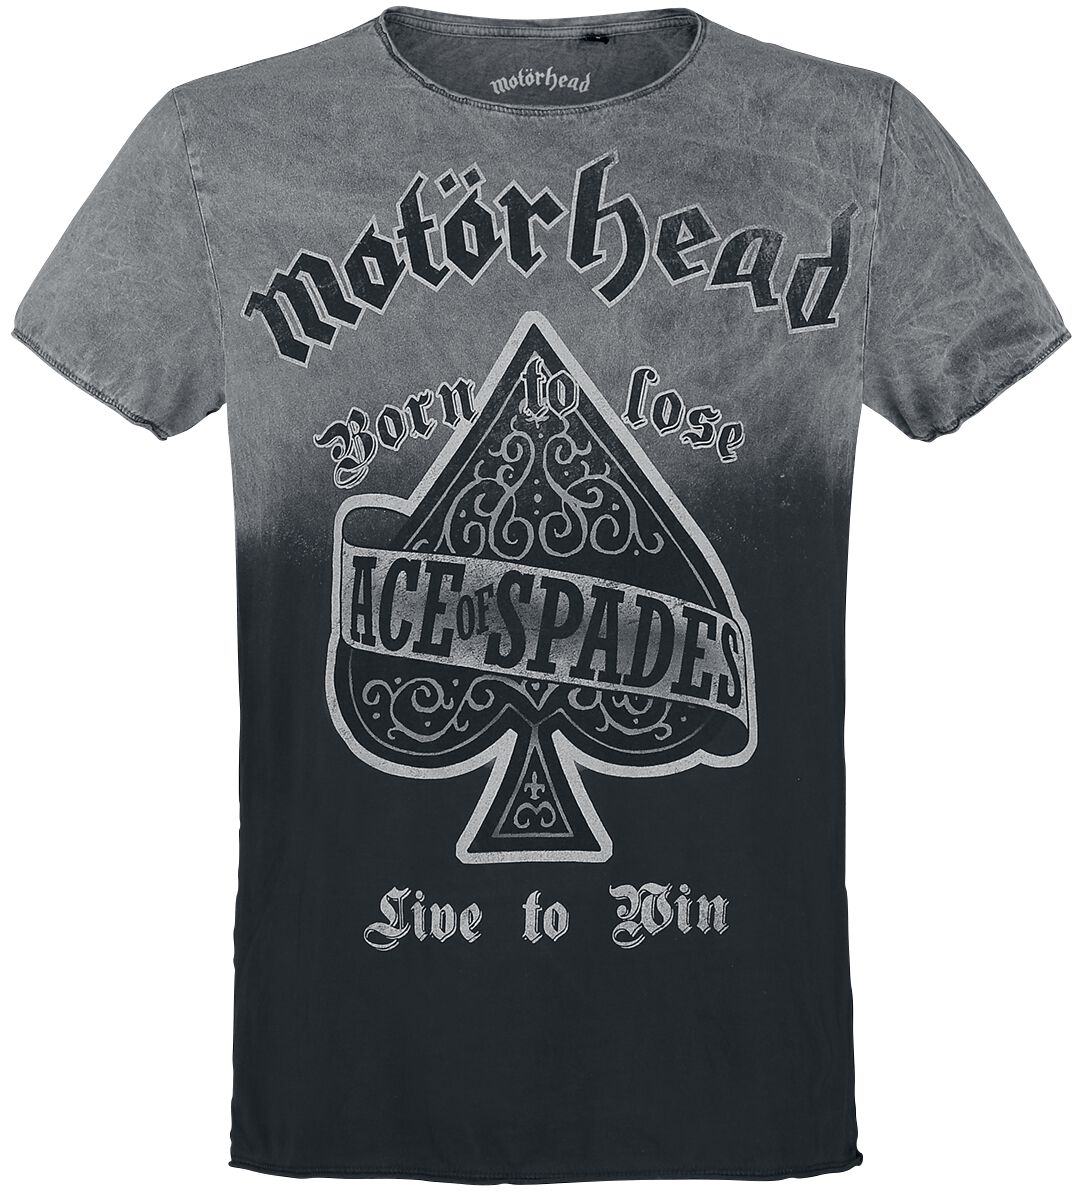 Image of Motörhead Ace Of Spades T-Shirt grau/dunkelgrau